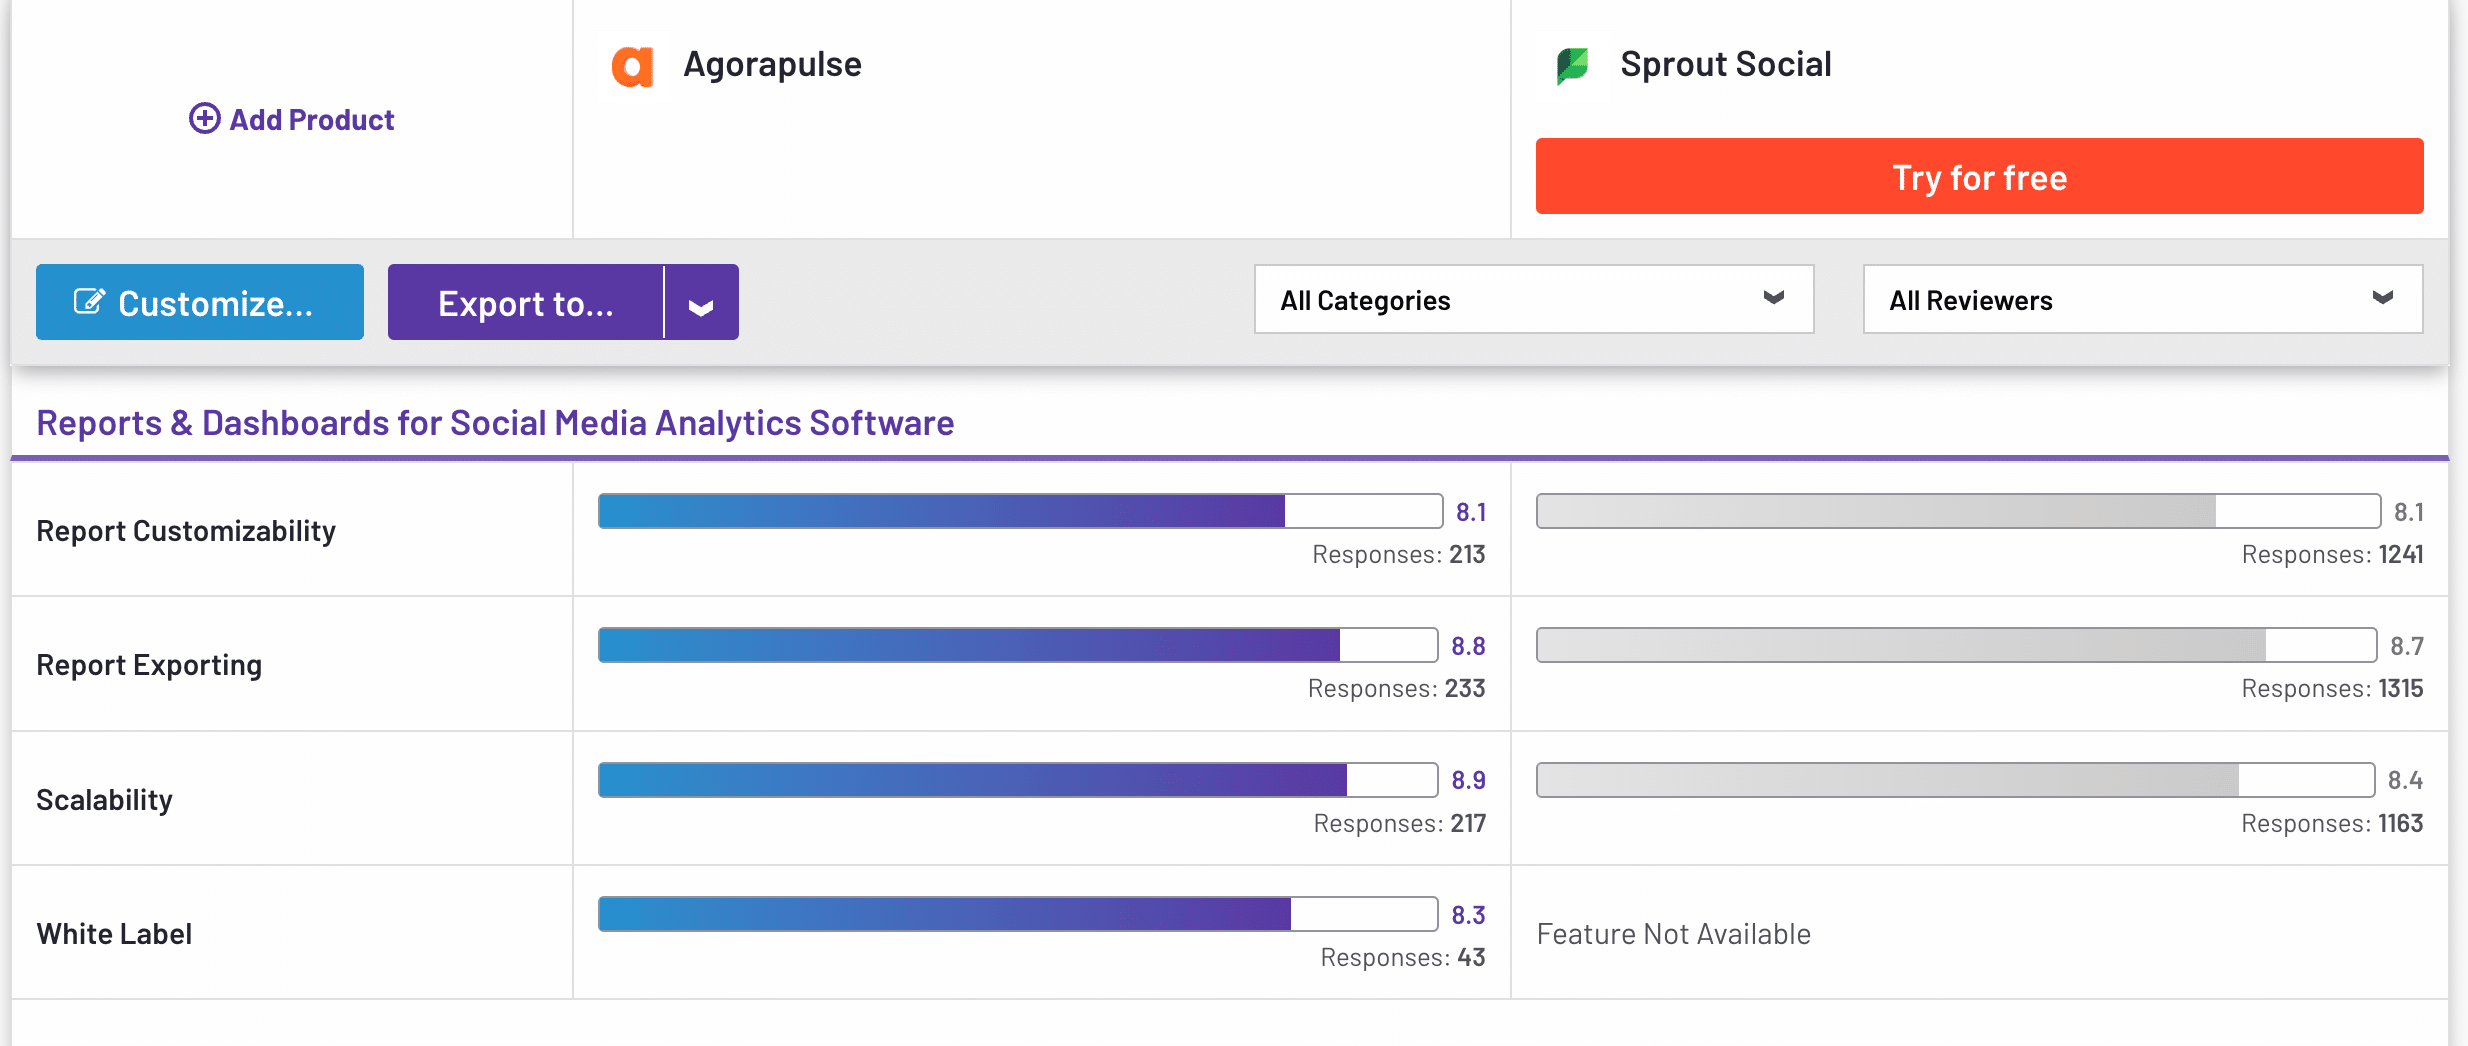 reporting capabilities comparison of agorapulse vs sprout social